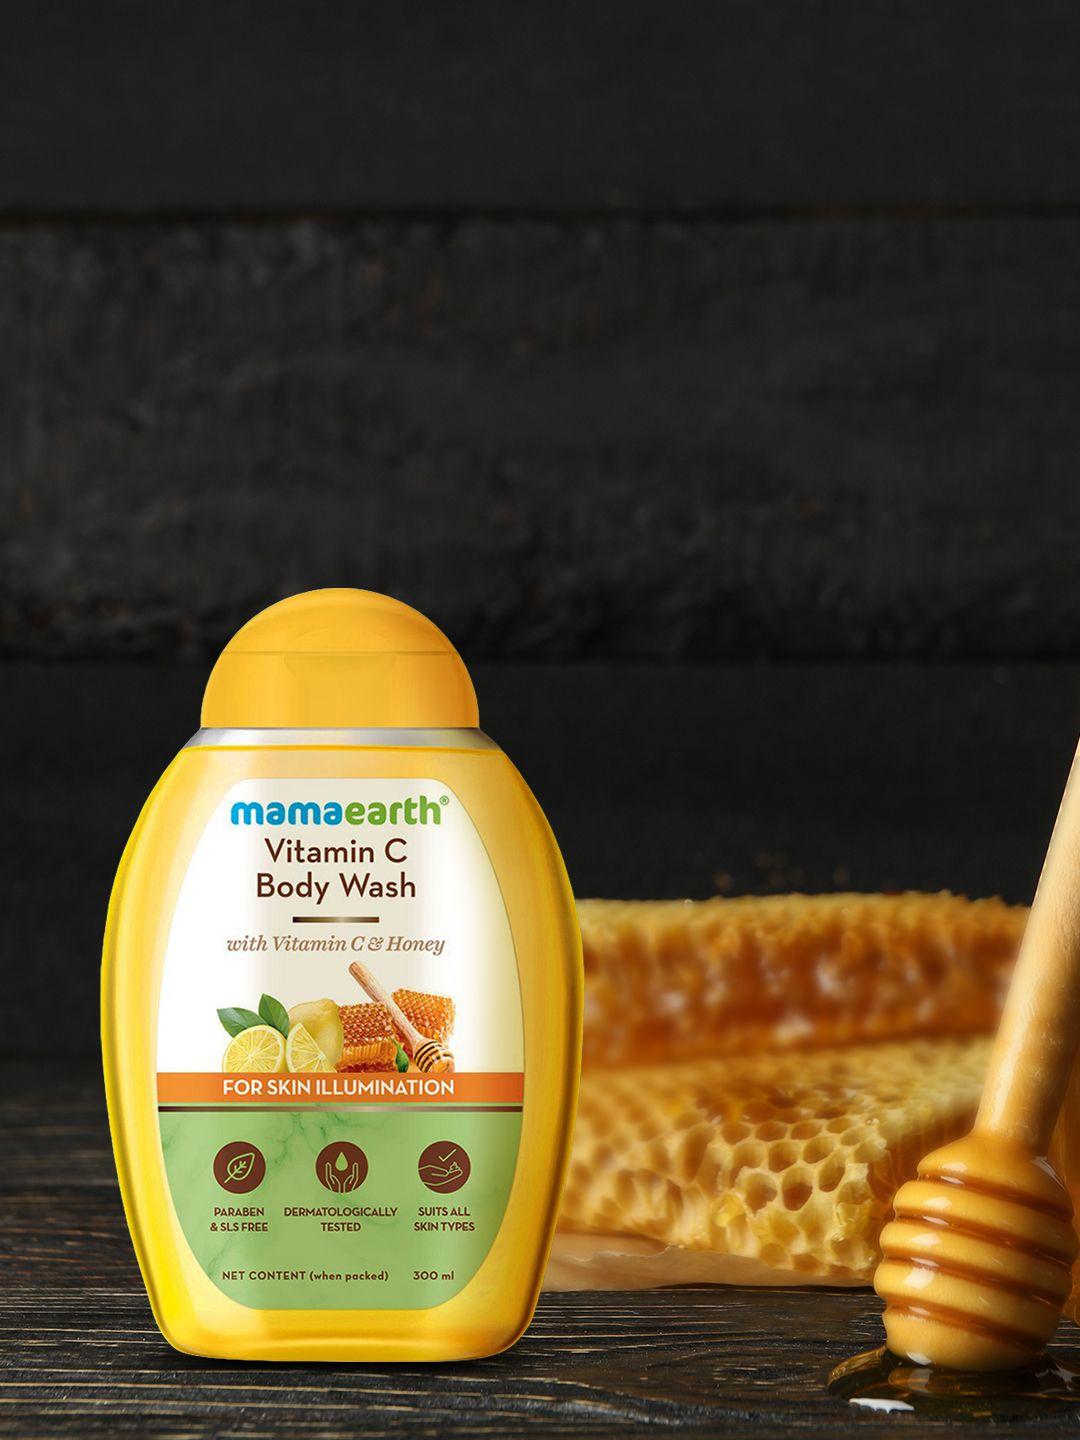 mamaearth vitamin c body wash with honey for skin illumination - 300 ml